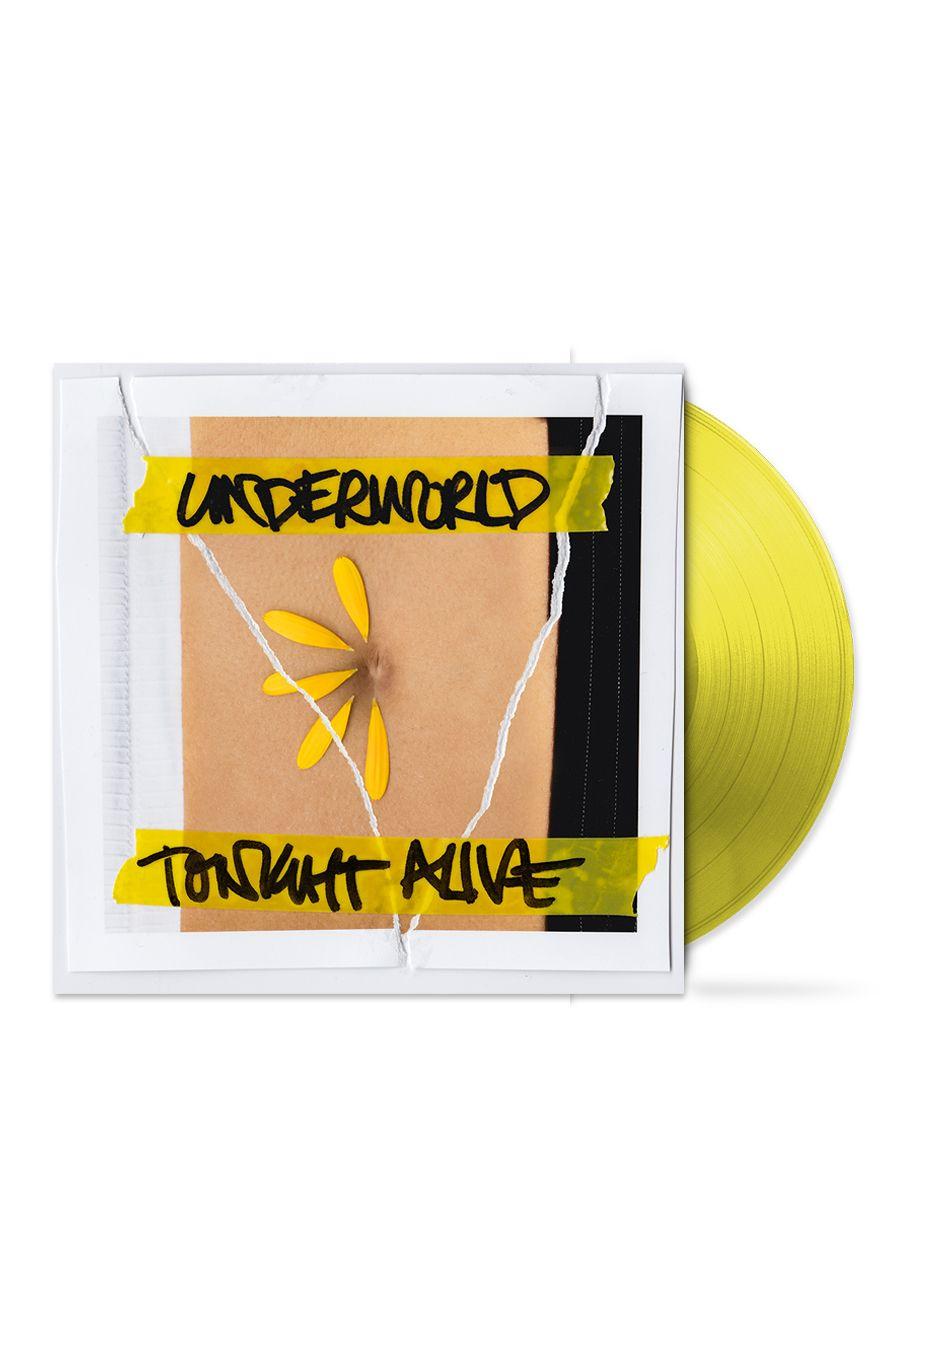 Tonight Alive Logo - Tonight Alive Transparent Gold LP